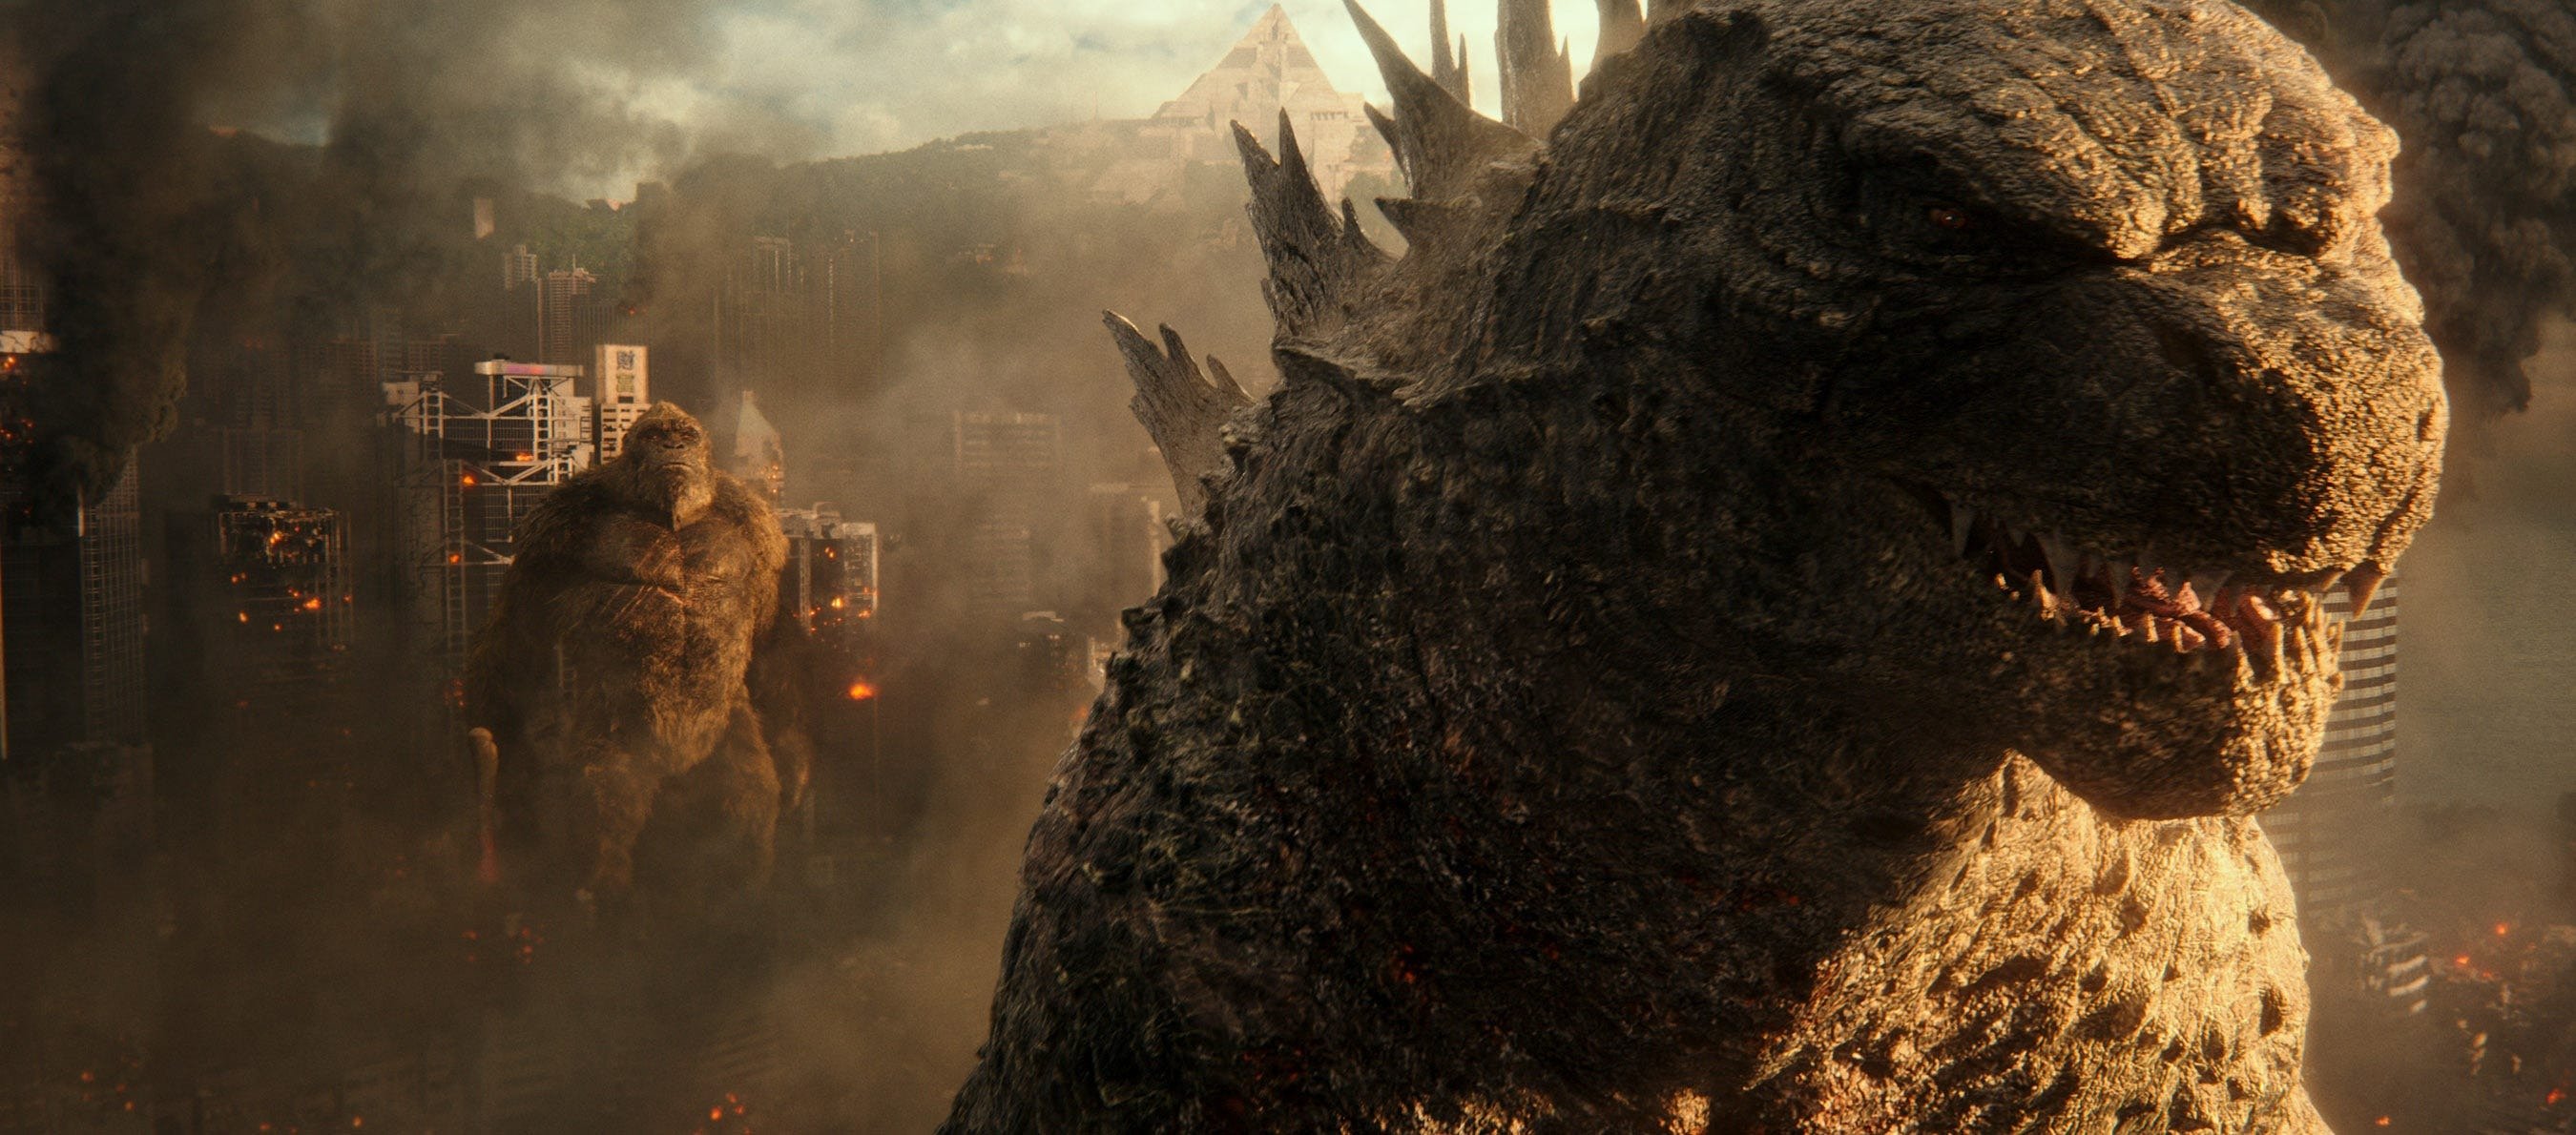 Godzilla vs Kong ©Warner Bros.